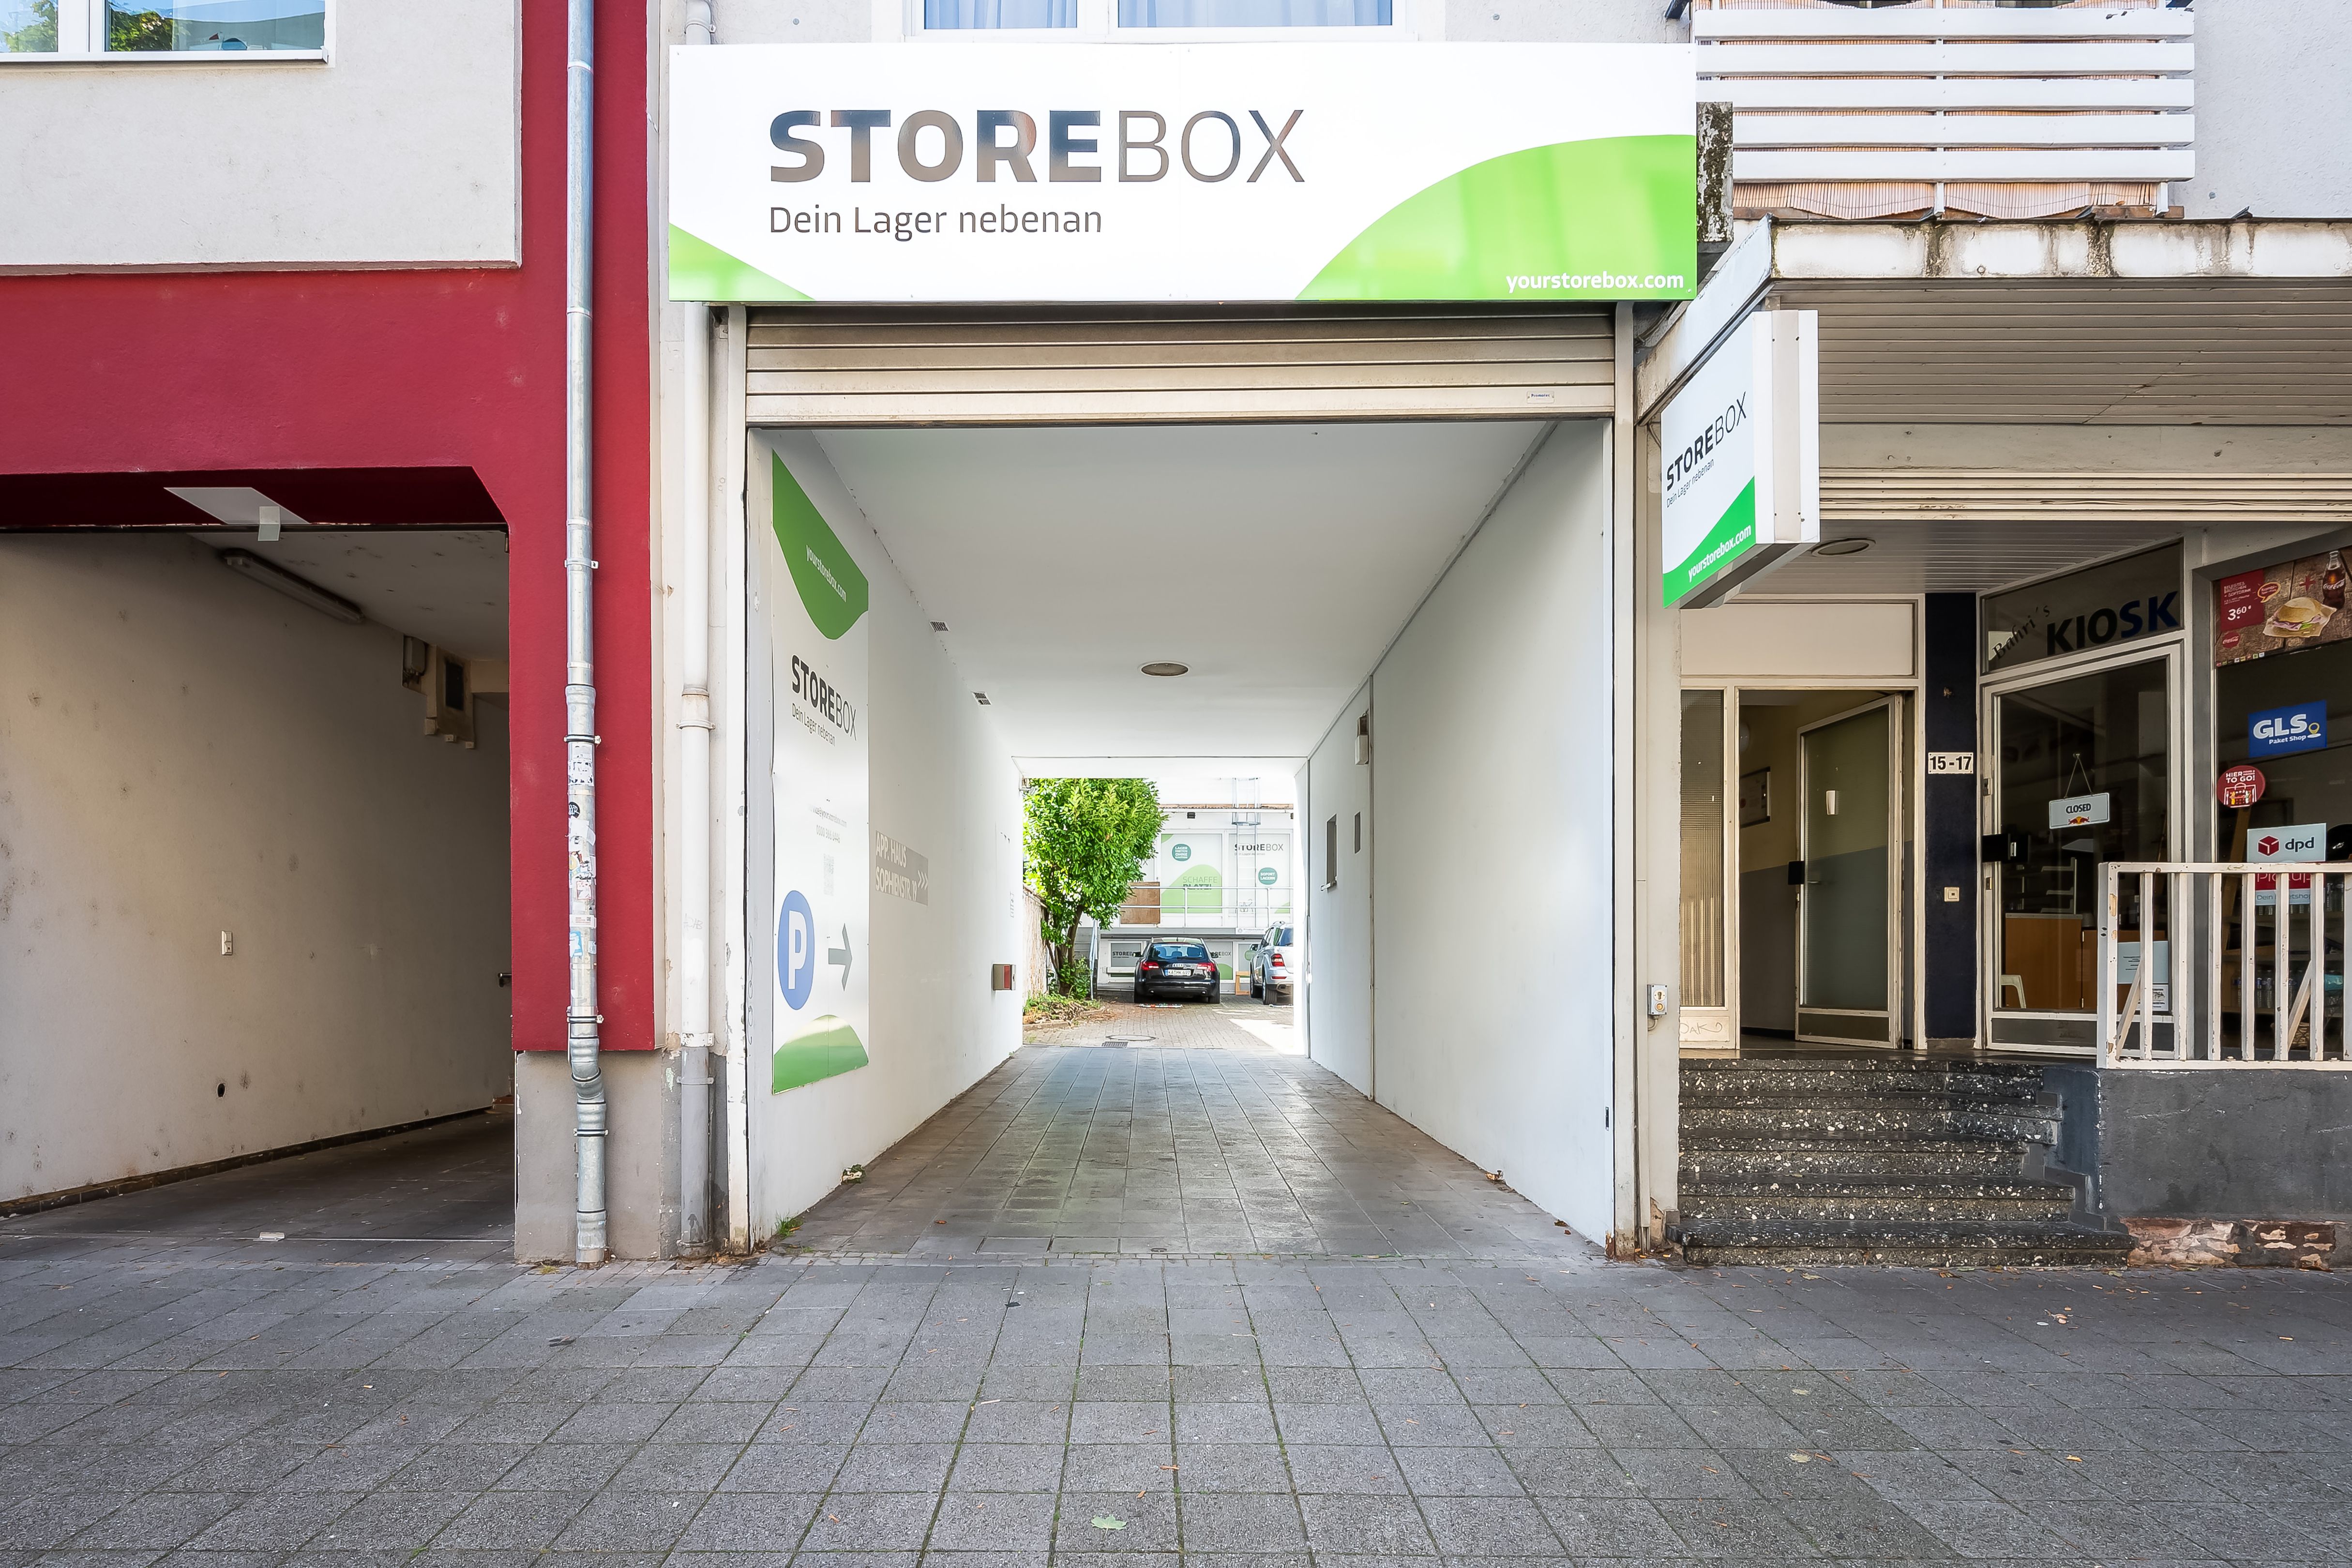 Storebox - Dein Lager nebenan, Sophienstraße 15-17 in Karlsruhe